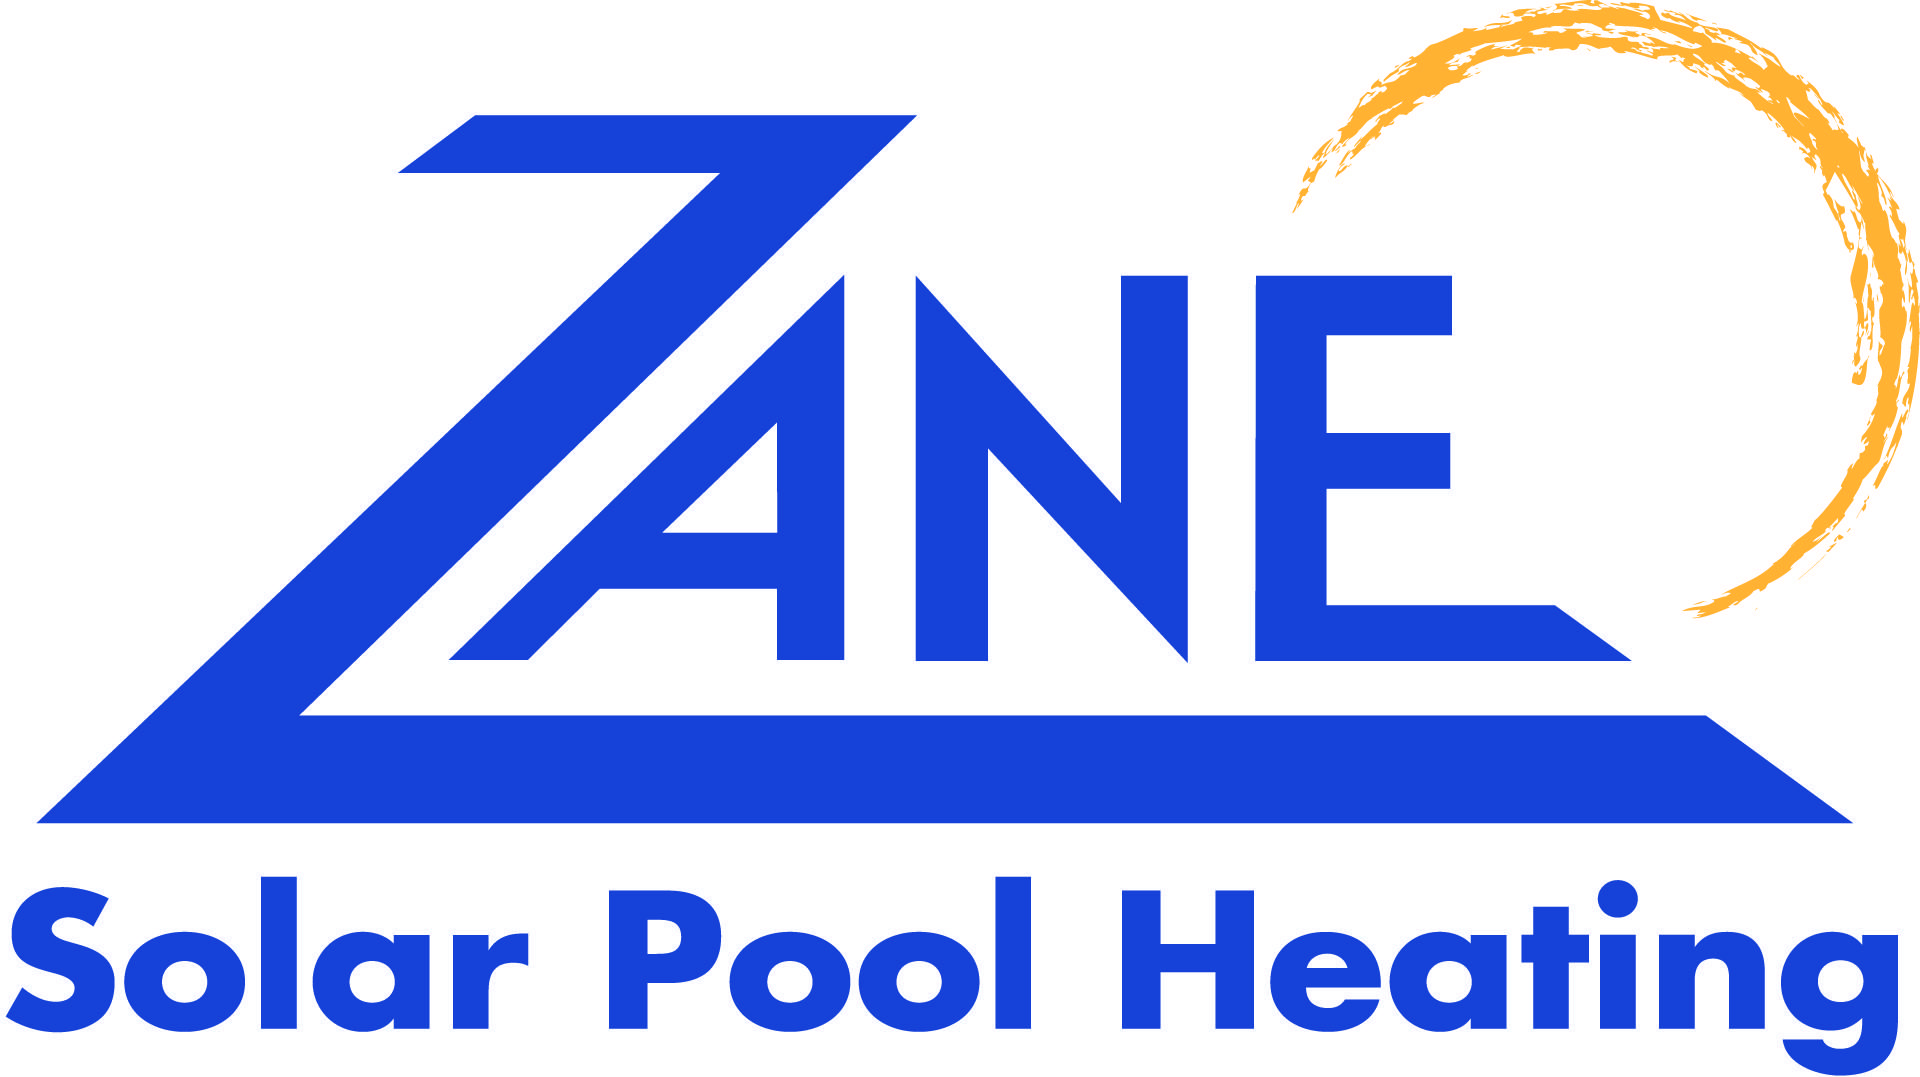 Zane Logo - Solar Pool Heating, Pool Heat Pumps, Gas Pool Heating, Pool Covers ...